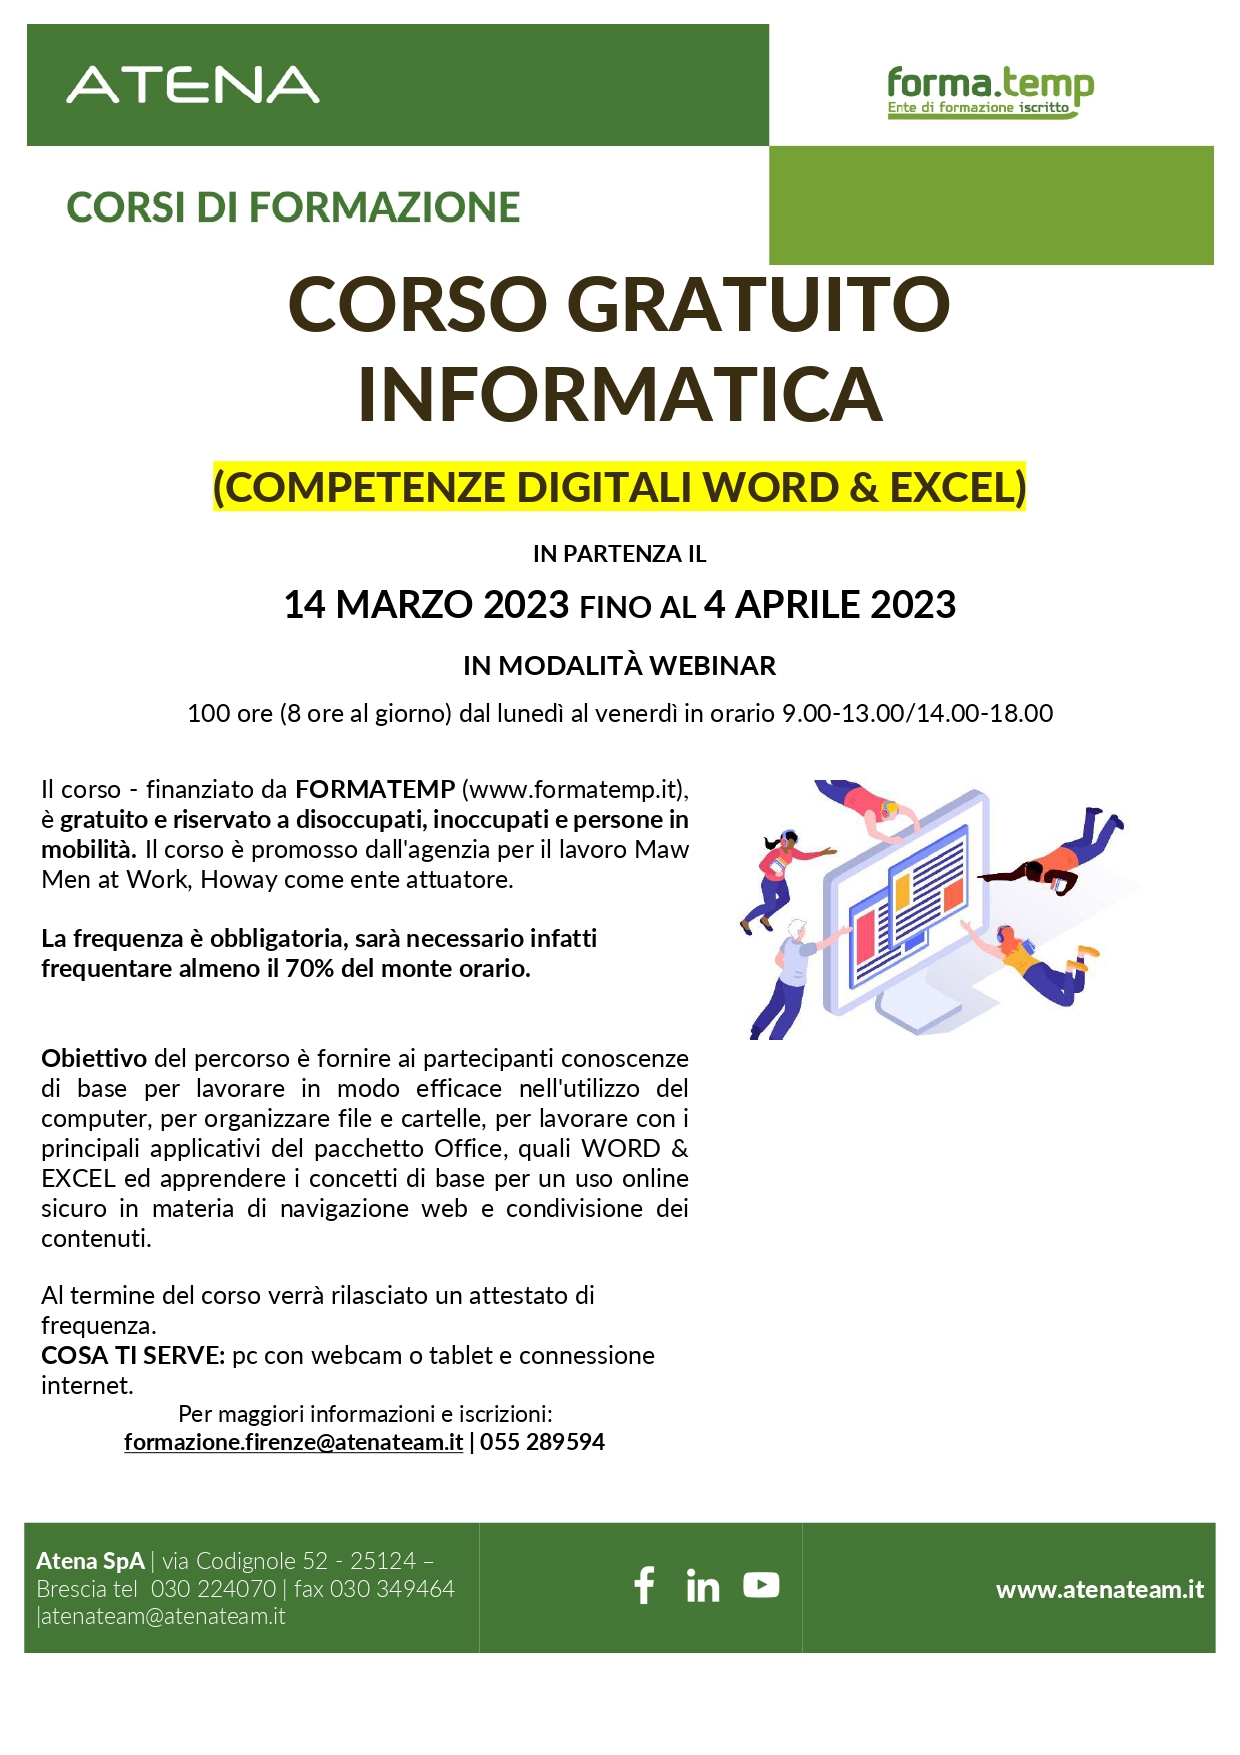 Corso Gratuito Informatica - FormaTemp